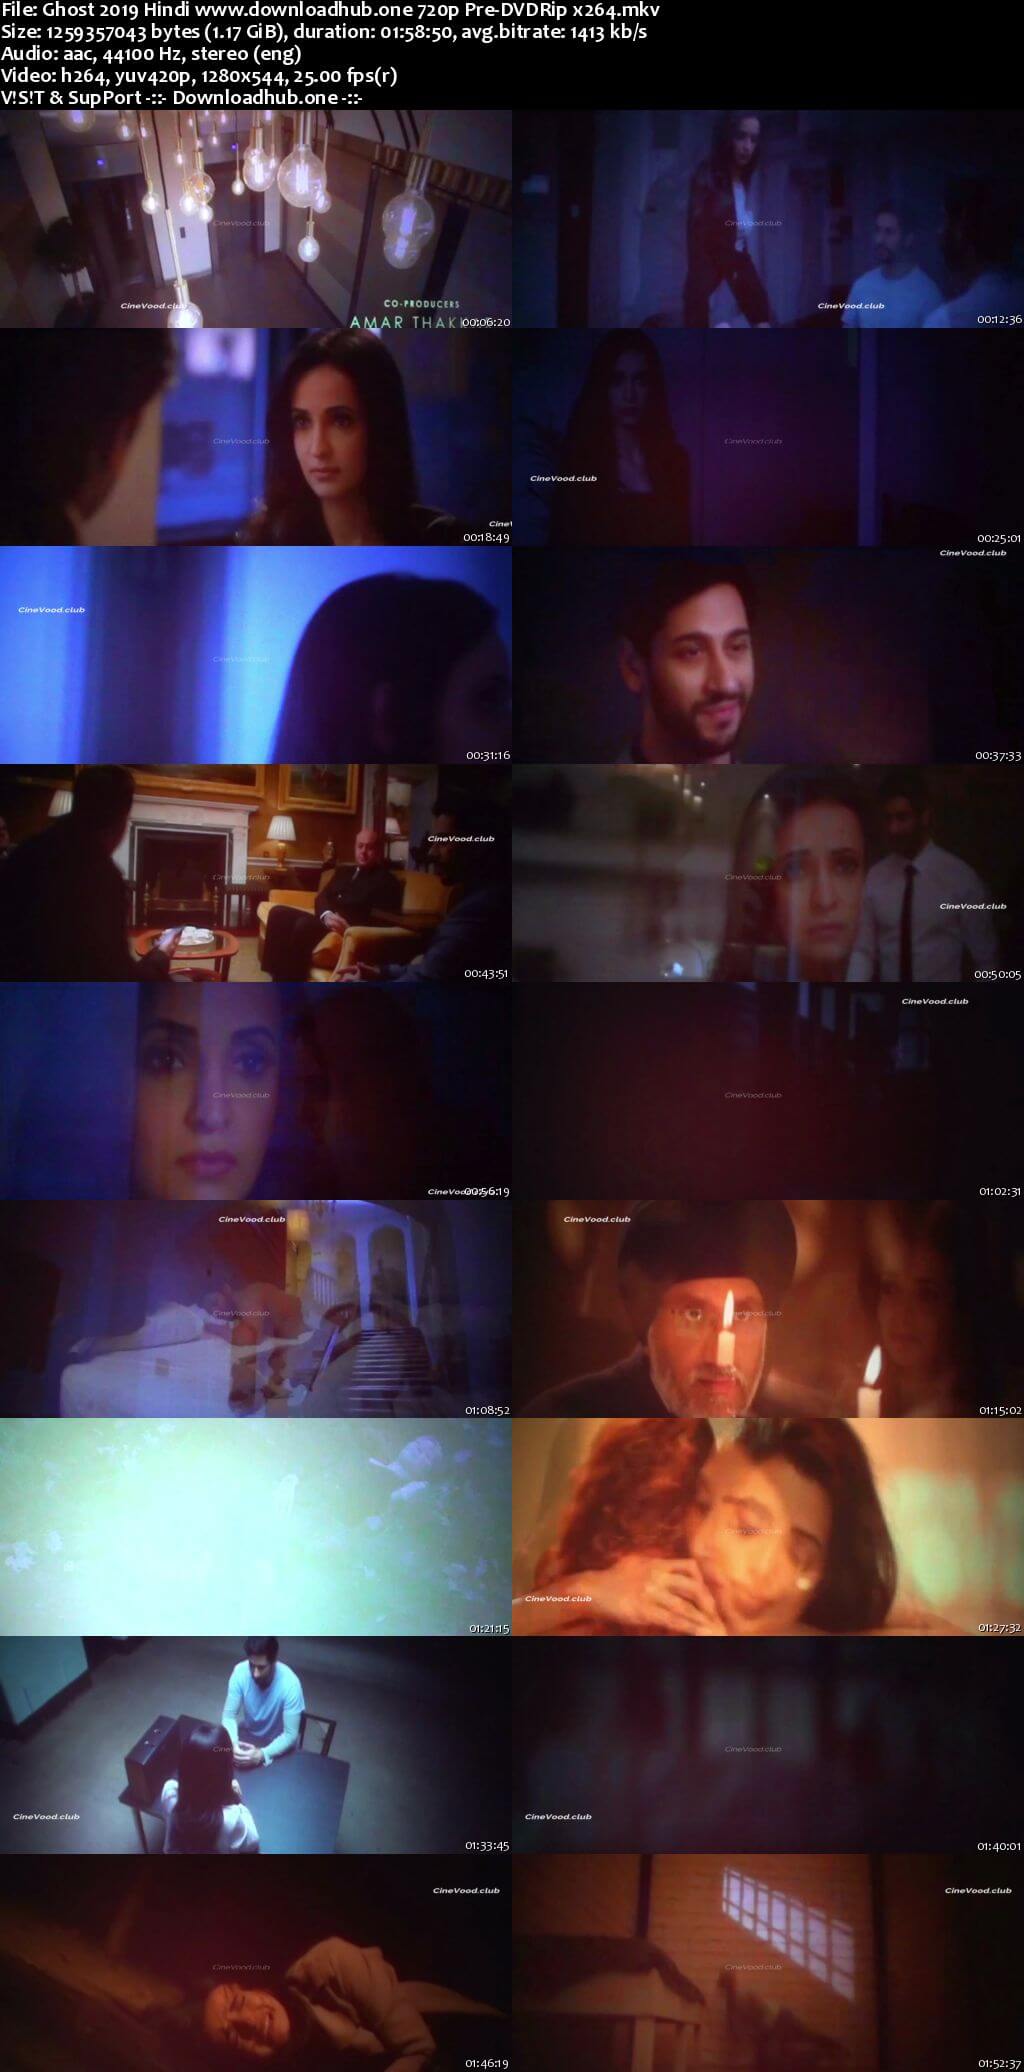 Ghost 2019 Hindi 720p Pre-DVDRip x264